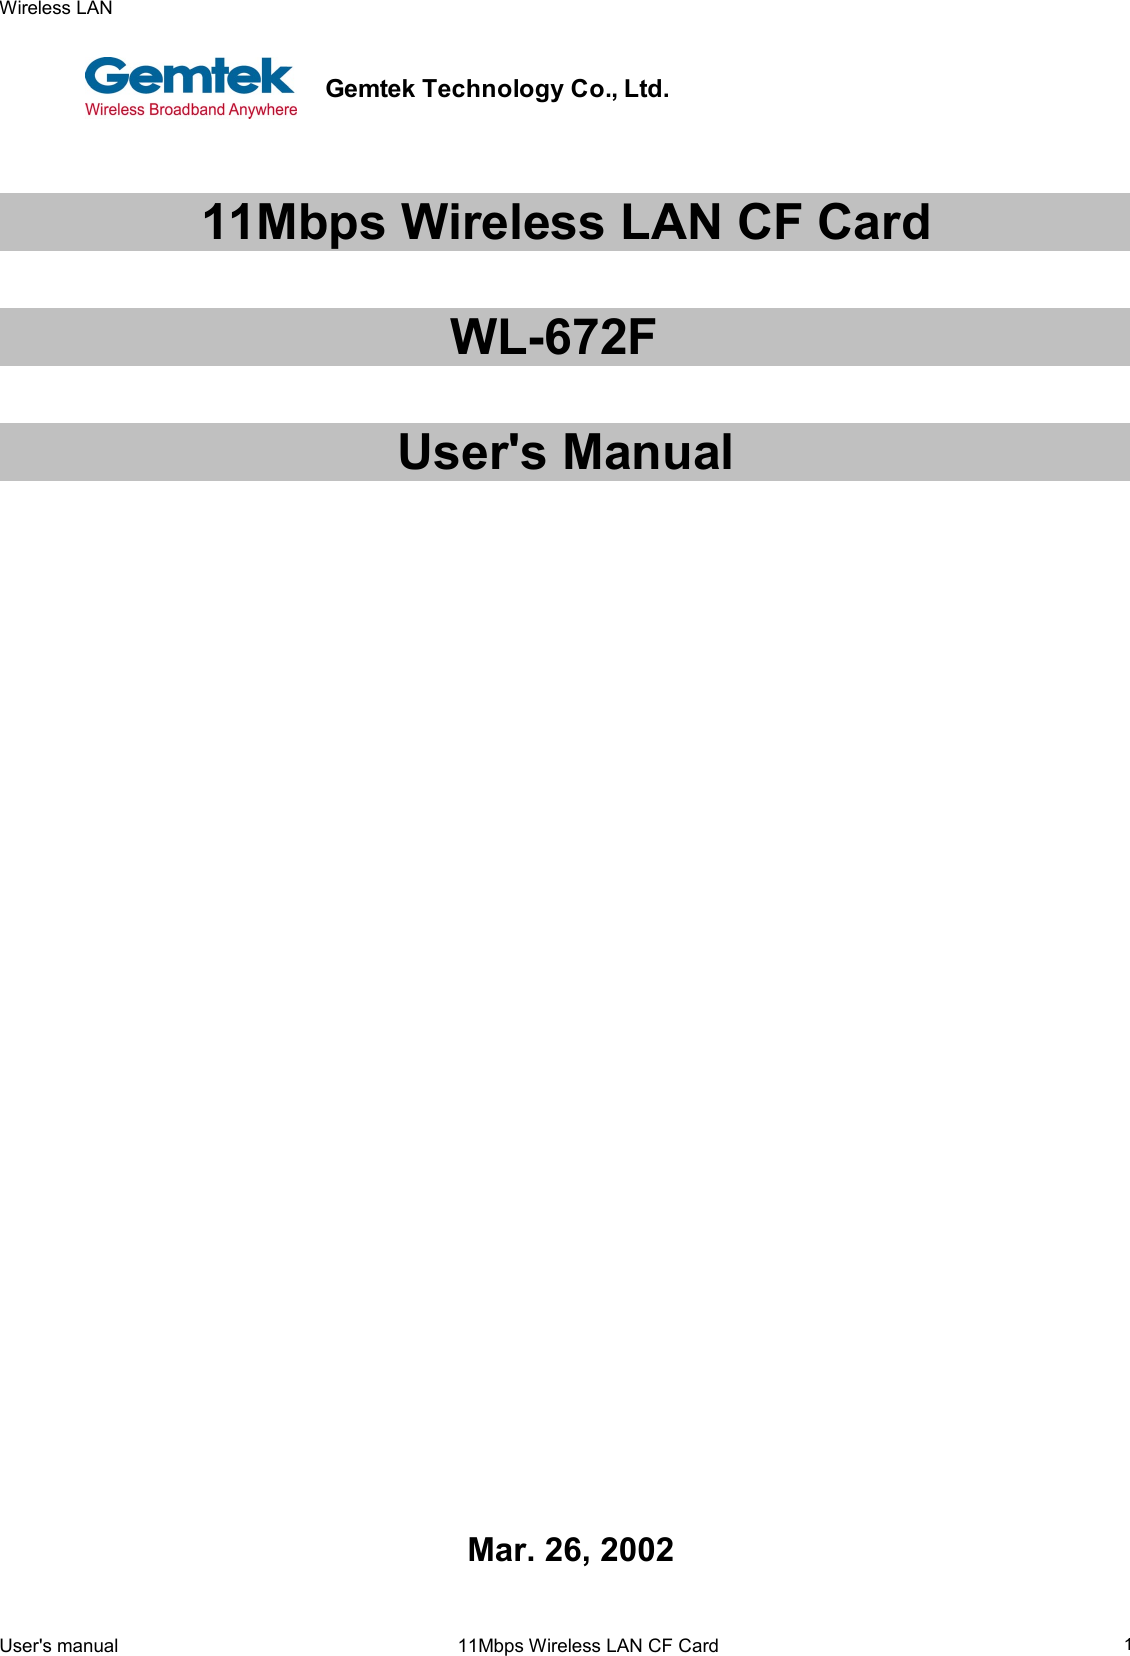 Wireless LANUser&apos;s manual                                                                 11Mbps Wireless LAN CF Card 1      11Mbps Wireless LAN CF CardWL-672FUser&apos;s Manual    Mar. 26, 2002Gemtek Technology Co., Ltd.